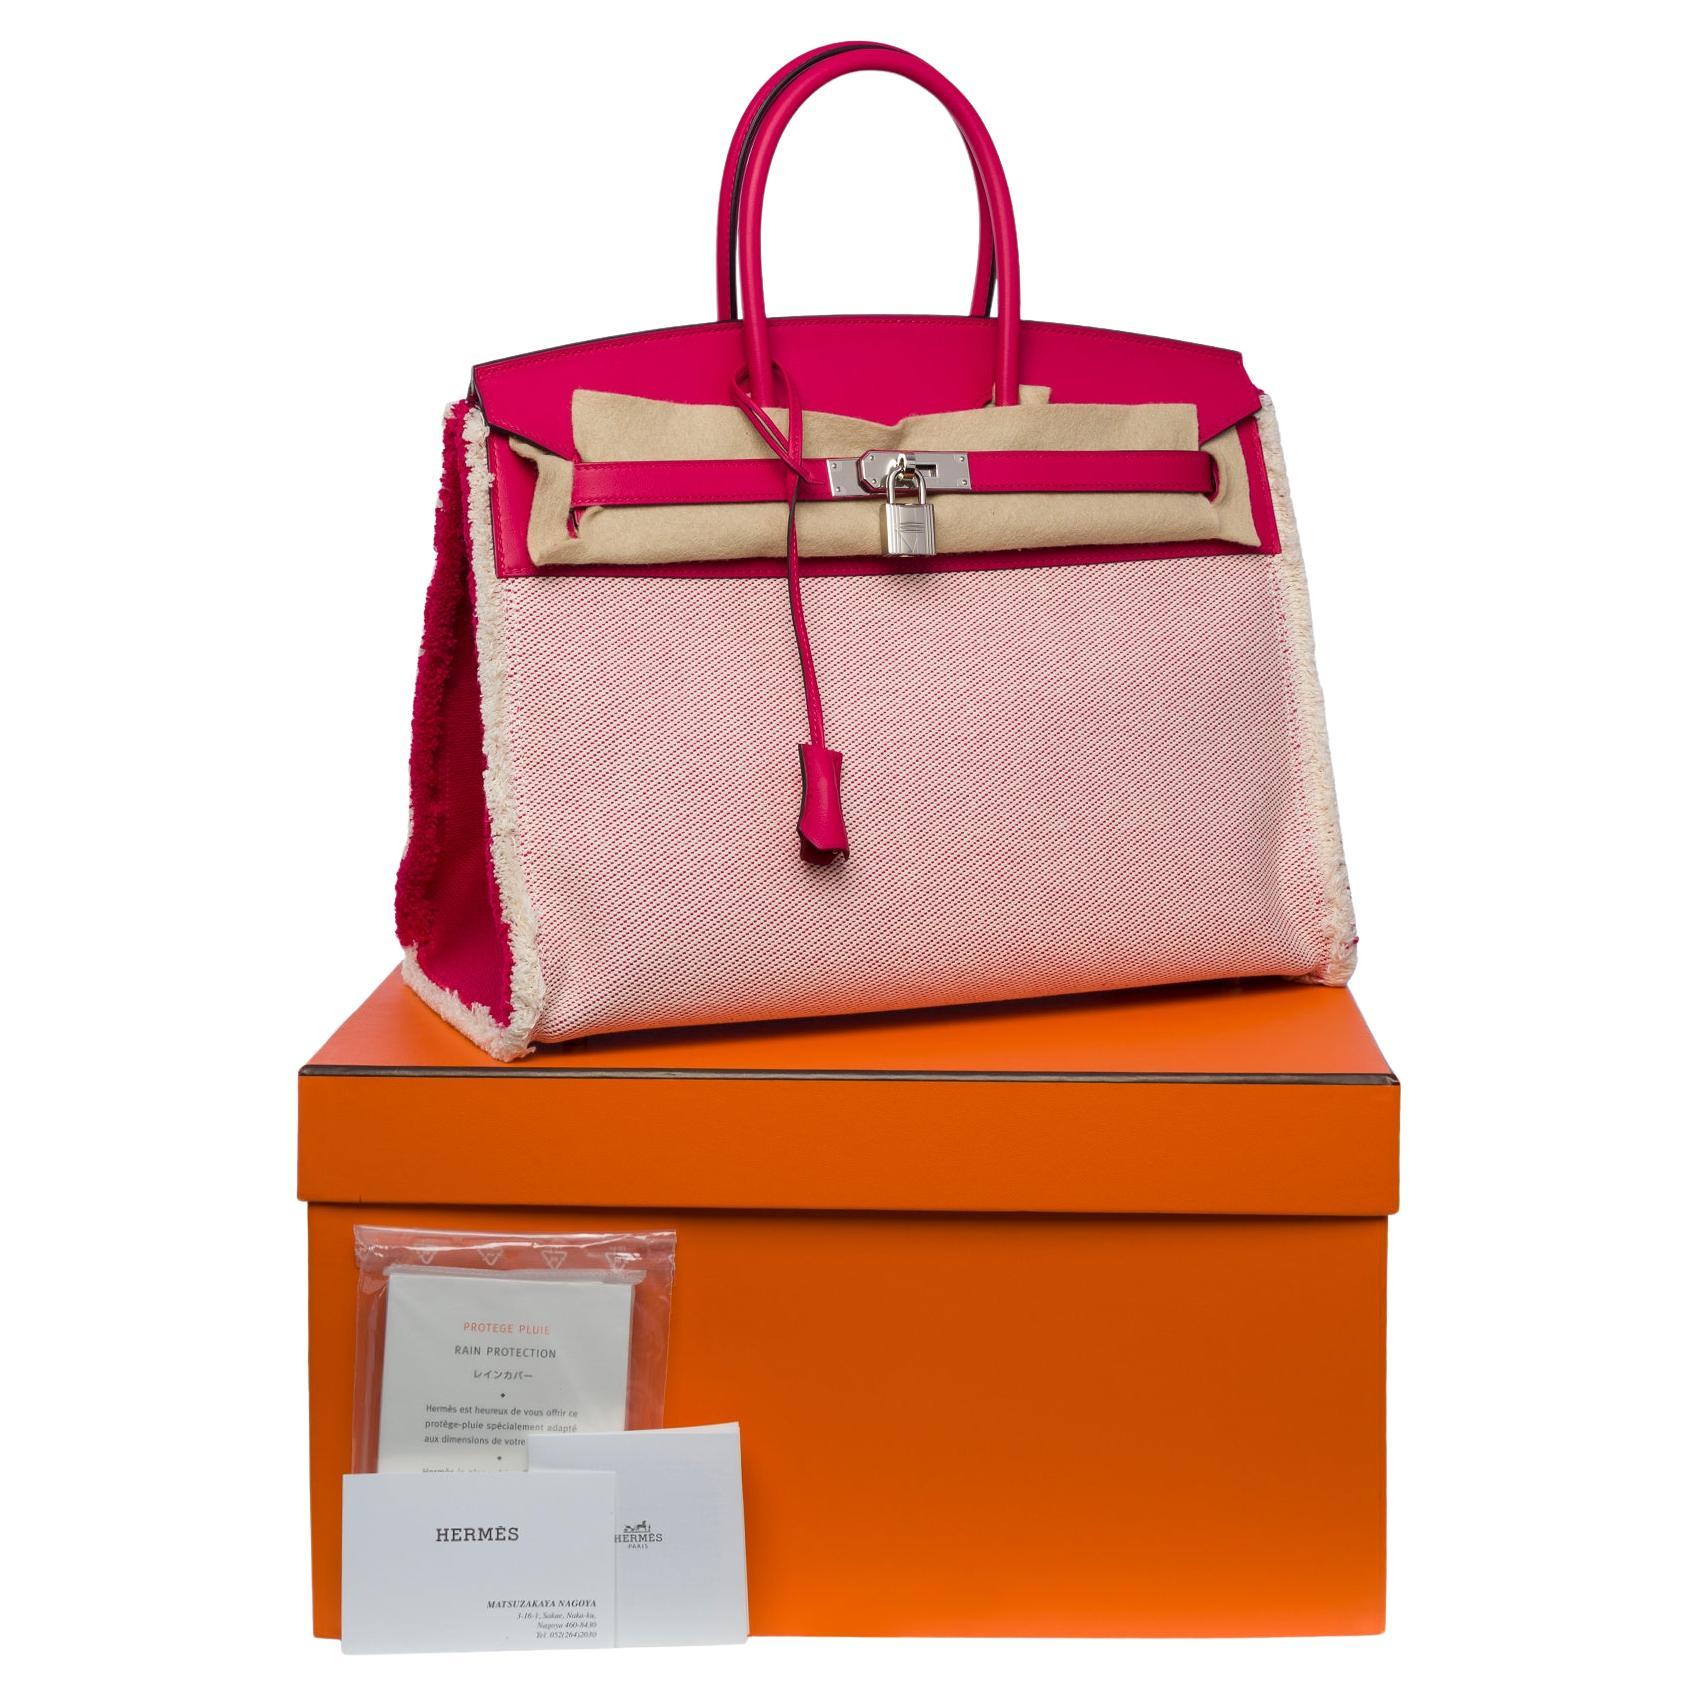 New Fray Fray Hermès Birkin 35 handbag in beige canvas/Pink swift leather, SHW For Sale